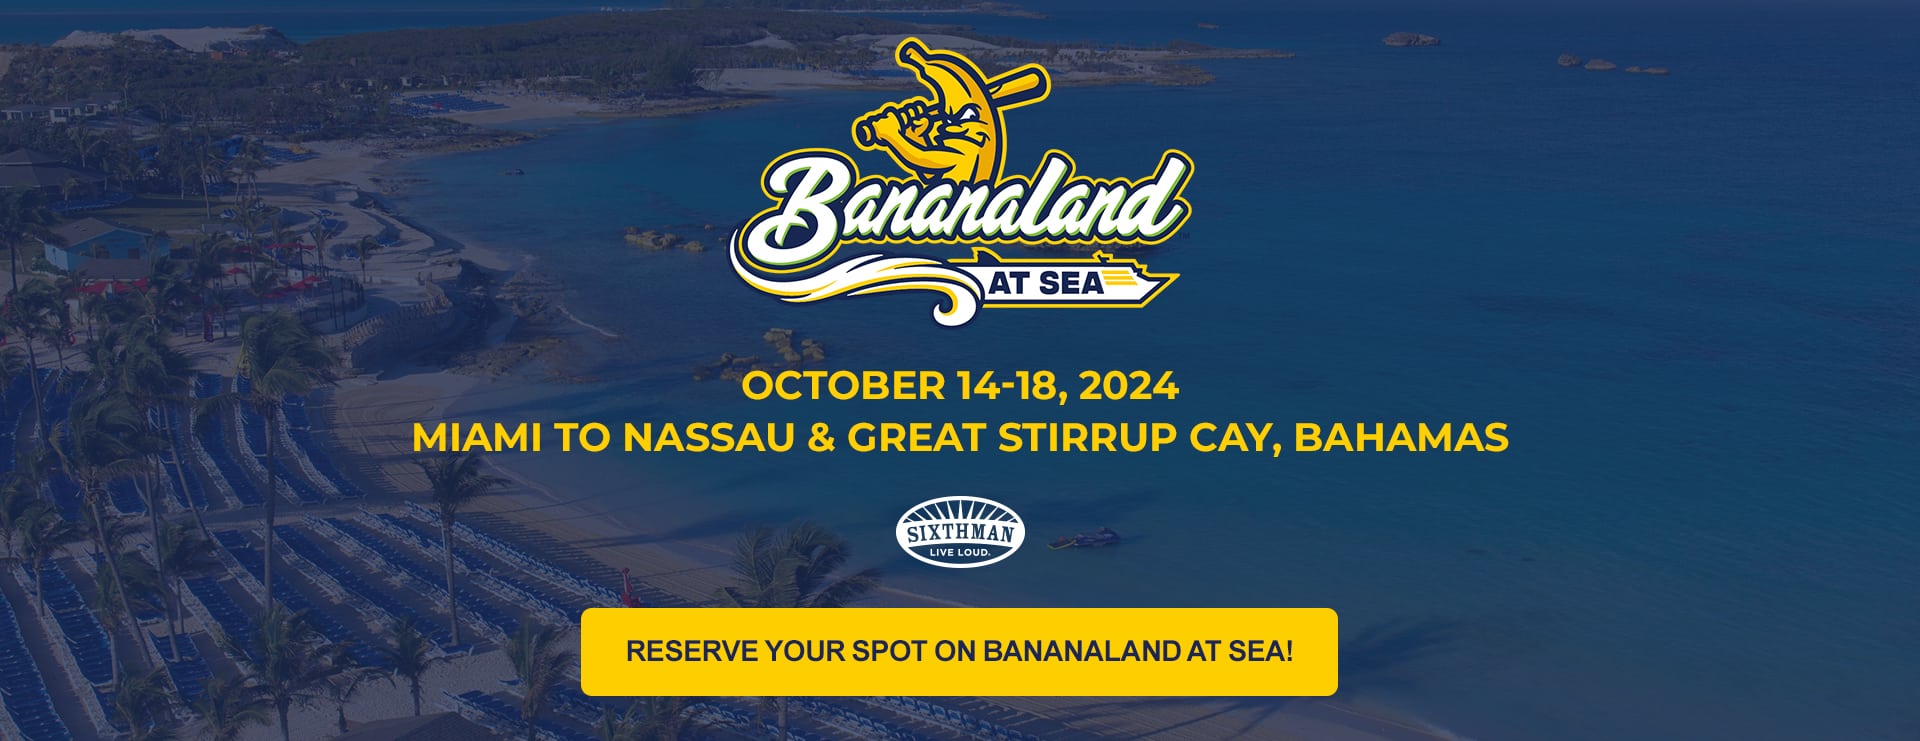 Savannah Bananas 2024 Tour Schedule: Get Your Tickets Now!